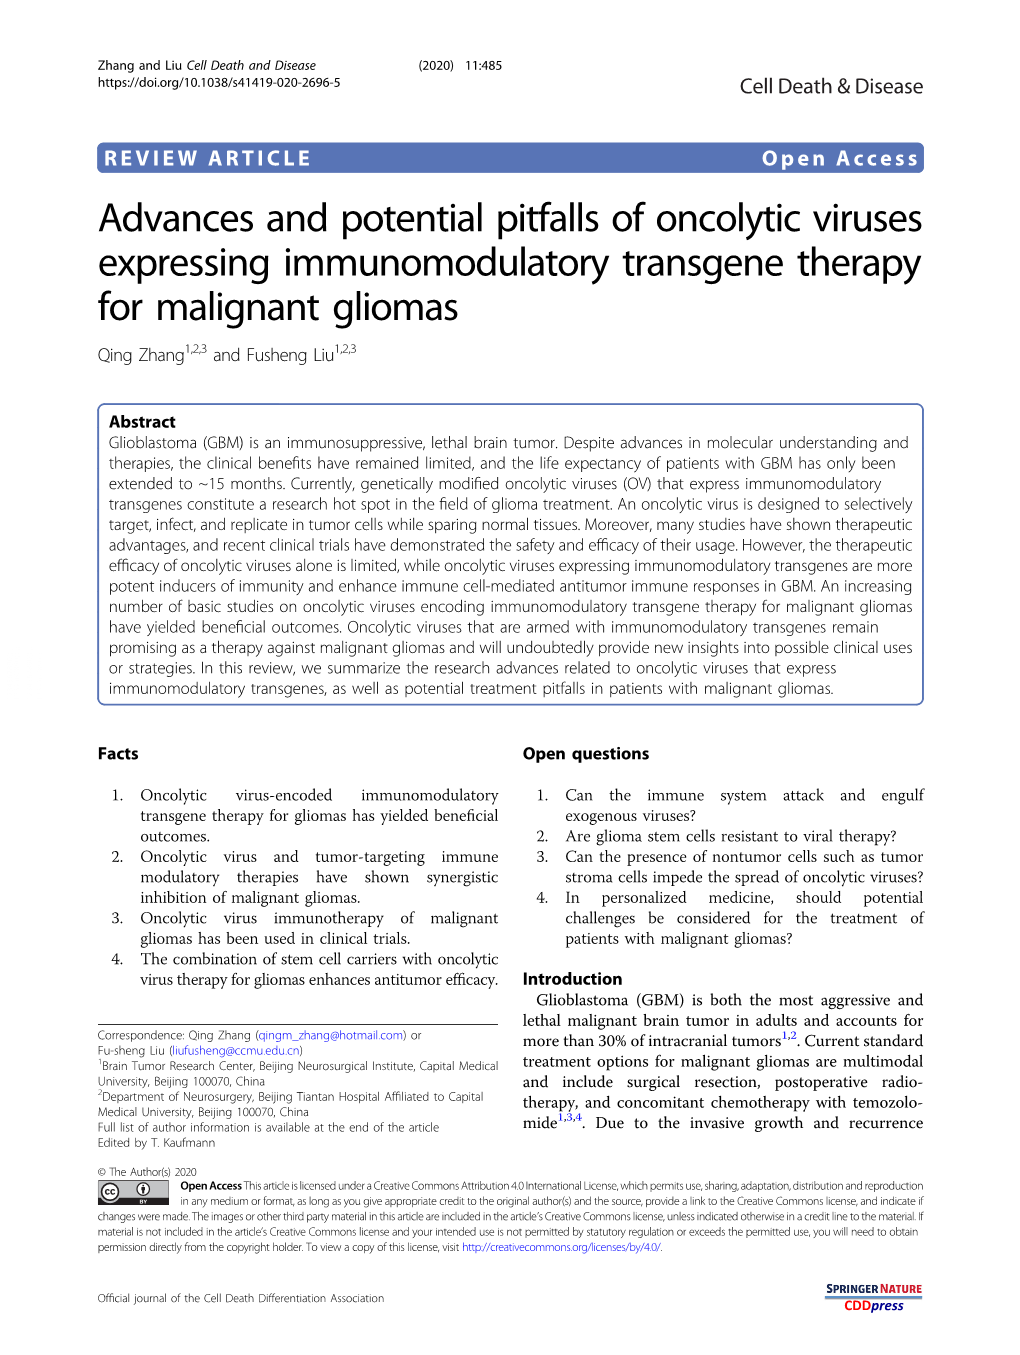 Advances and Potential Pitfalls of Oncolytic Viruses Expressing Immunomodulatory Transgene Therapy for Malignant Gliomas Qing Zhang1,2,3 and Fusheng Liu1,2,3